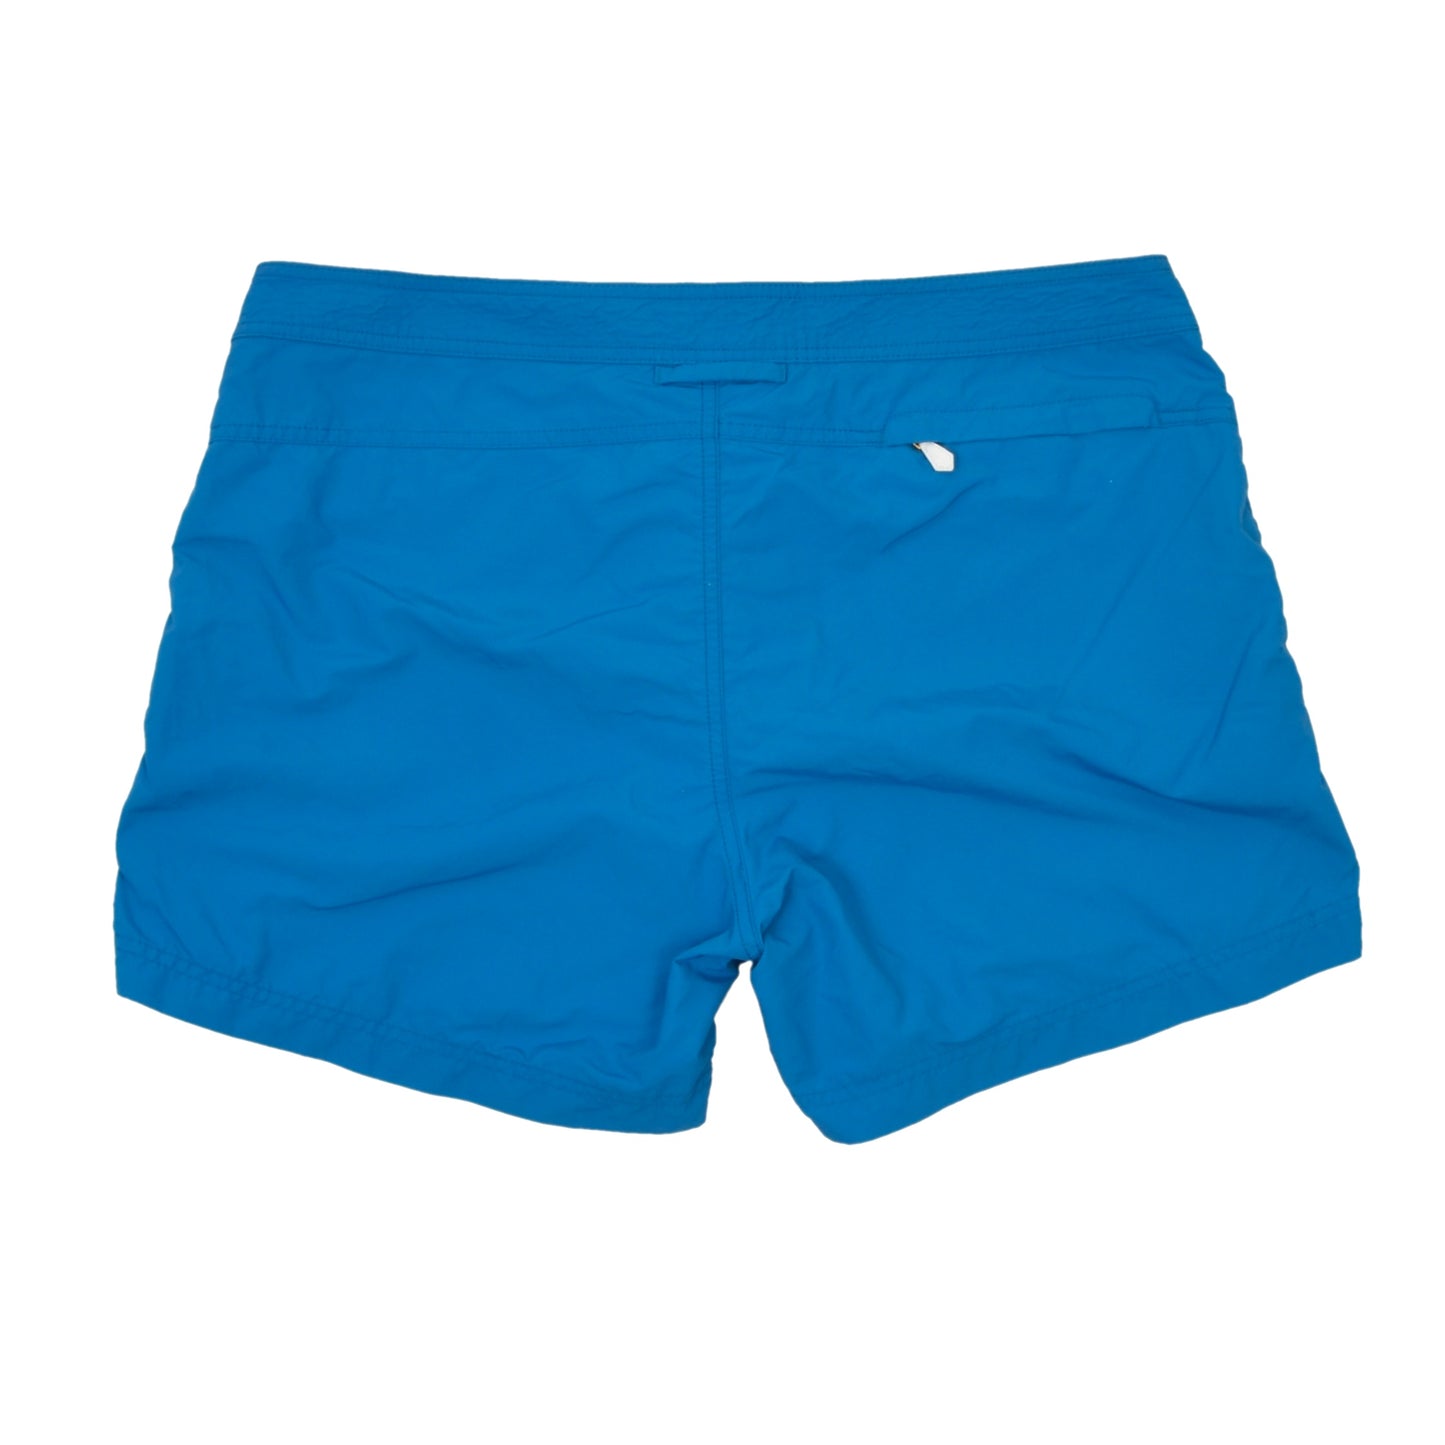 Tom Ford Swim Shorts Size 54 - Blue